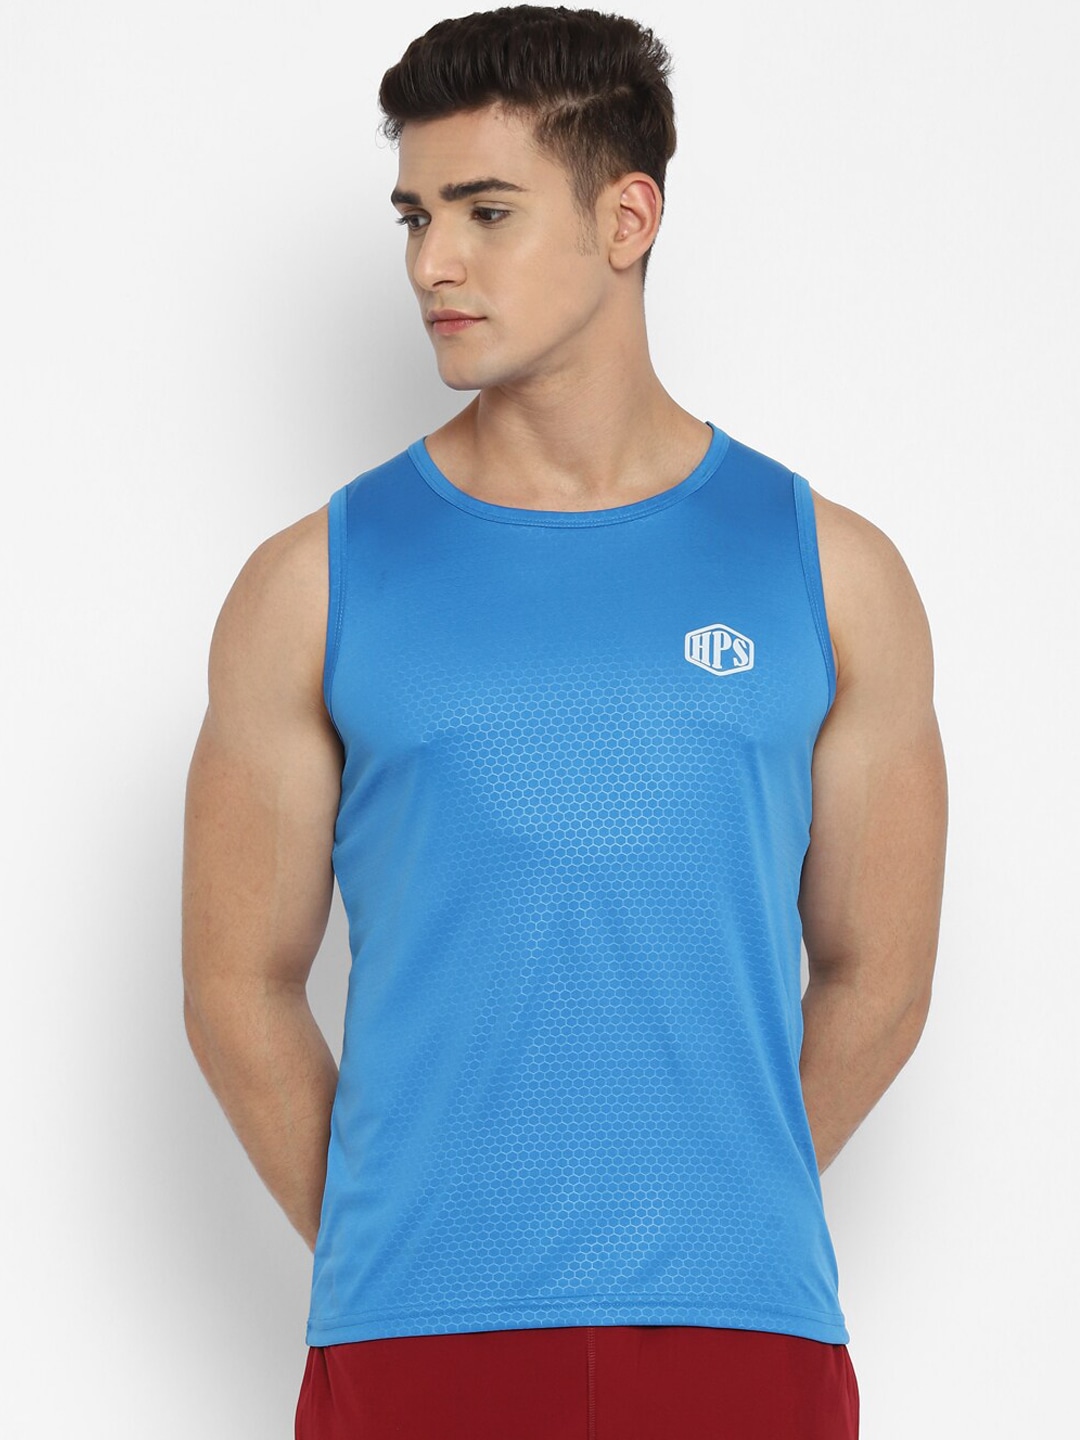 Clothing Innerwear Vests | HPS Sports Men Blue Solid Innerwear Gym Vests - ZF69064